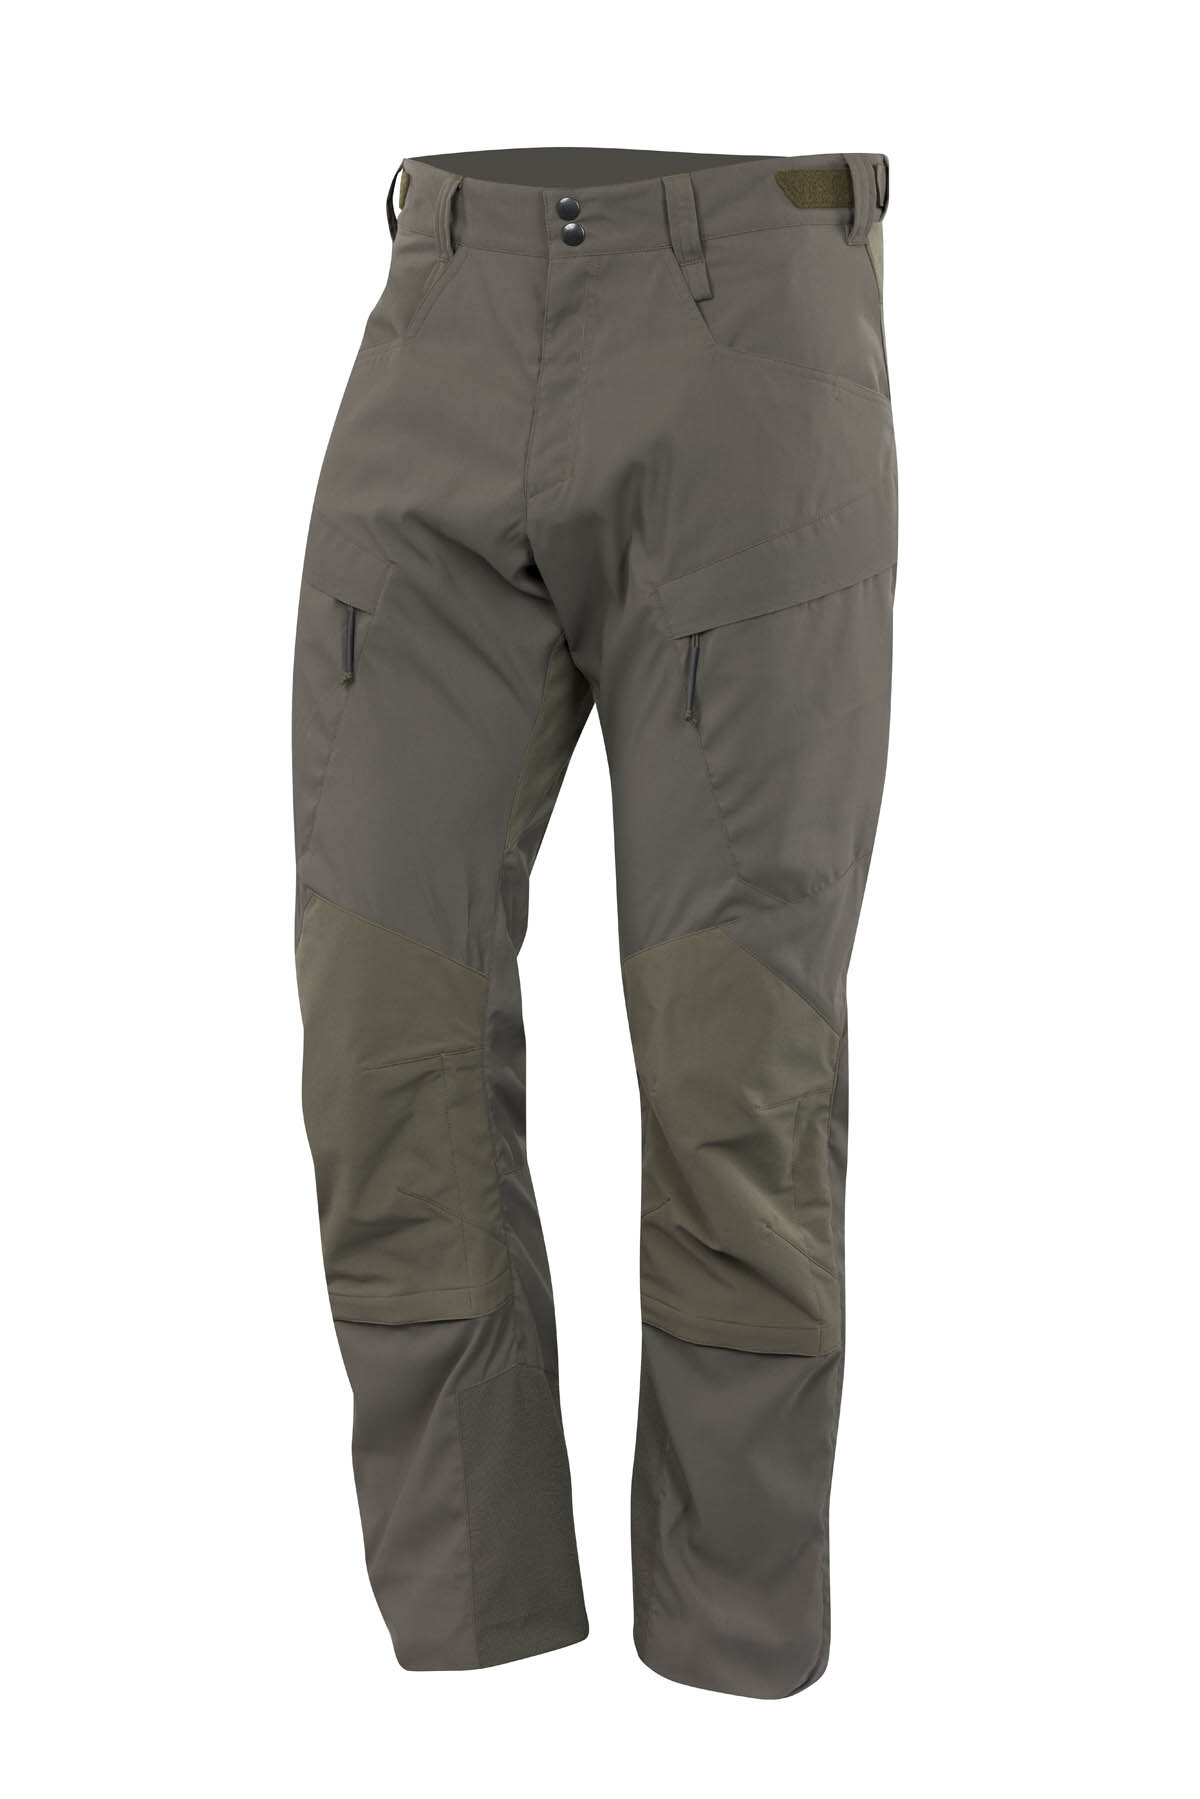 Softshellové kalhoty Operator Tilak Military Gear® – Khaki (Barva: Khaki, Velikost: S)